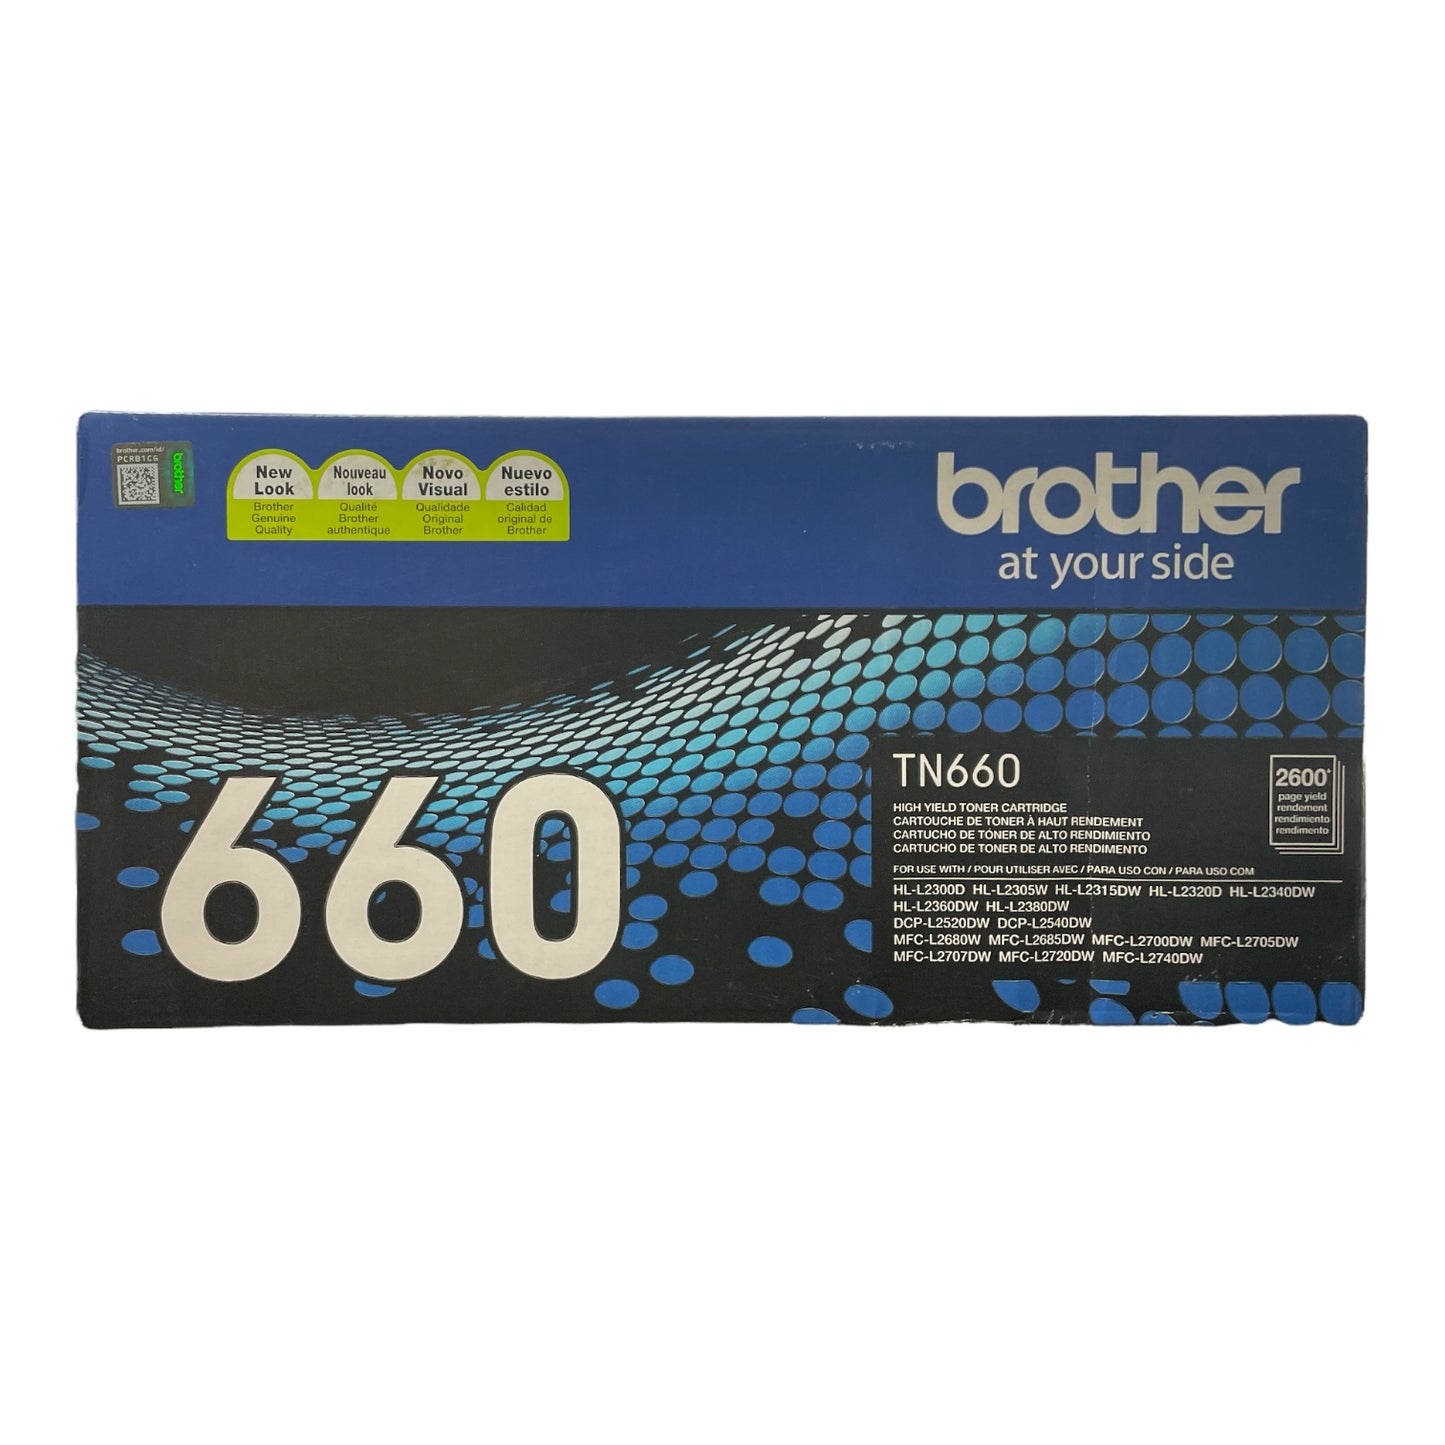 Genuine Brother TN660 High Yield Toner Cartridge, 2600 Page Yield